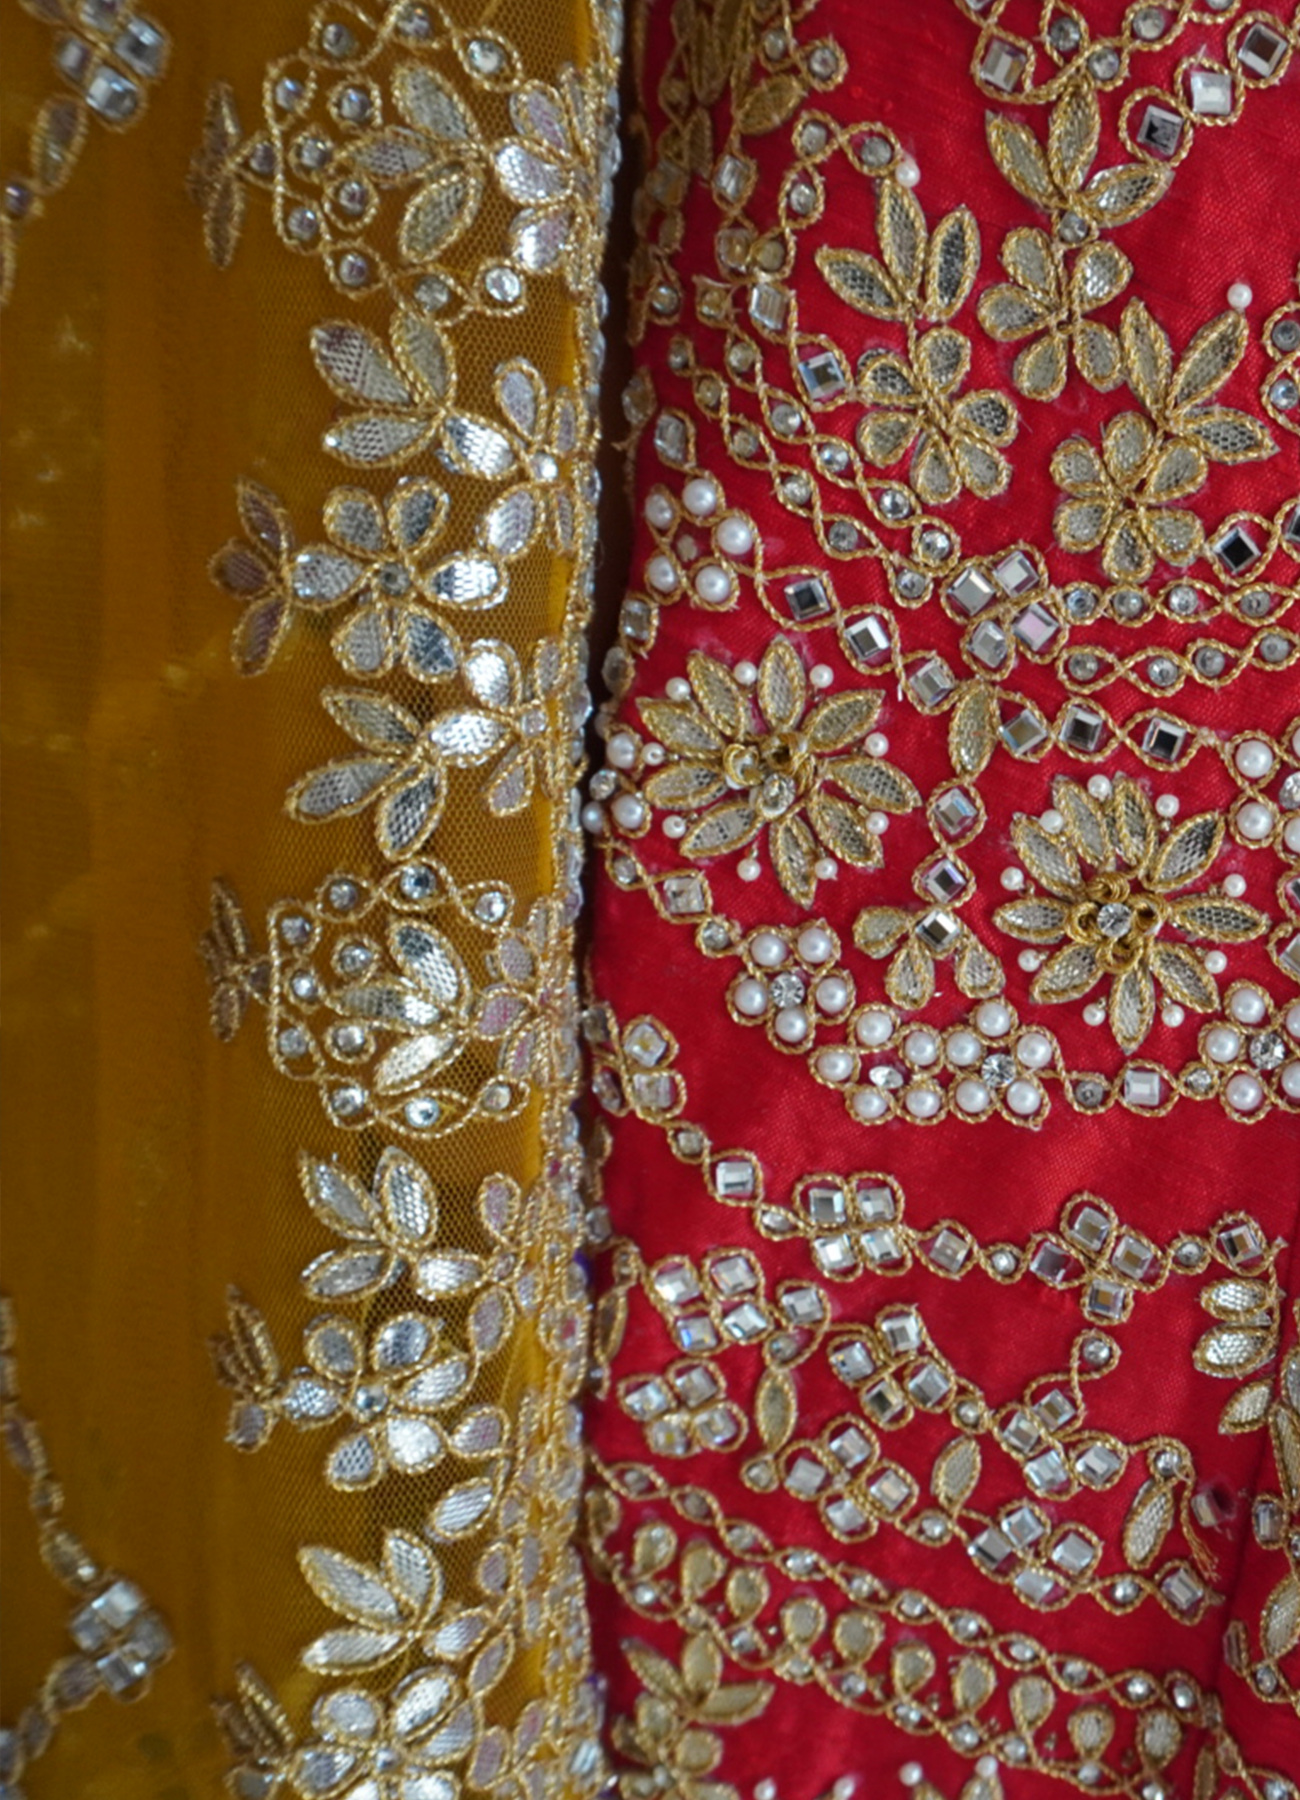 Details more than 147 lehenga mastani dress best